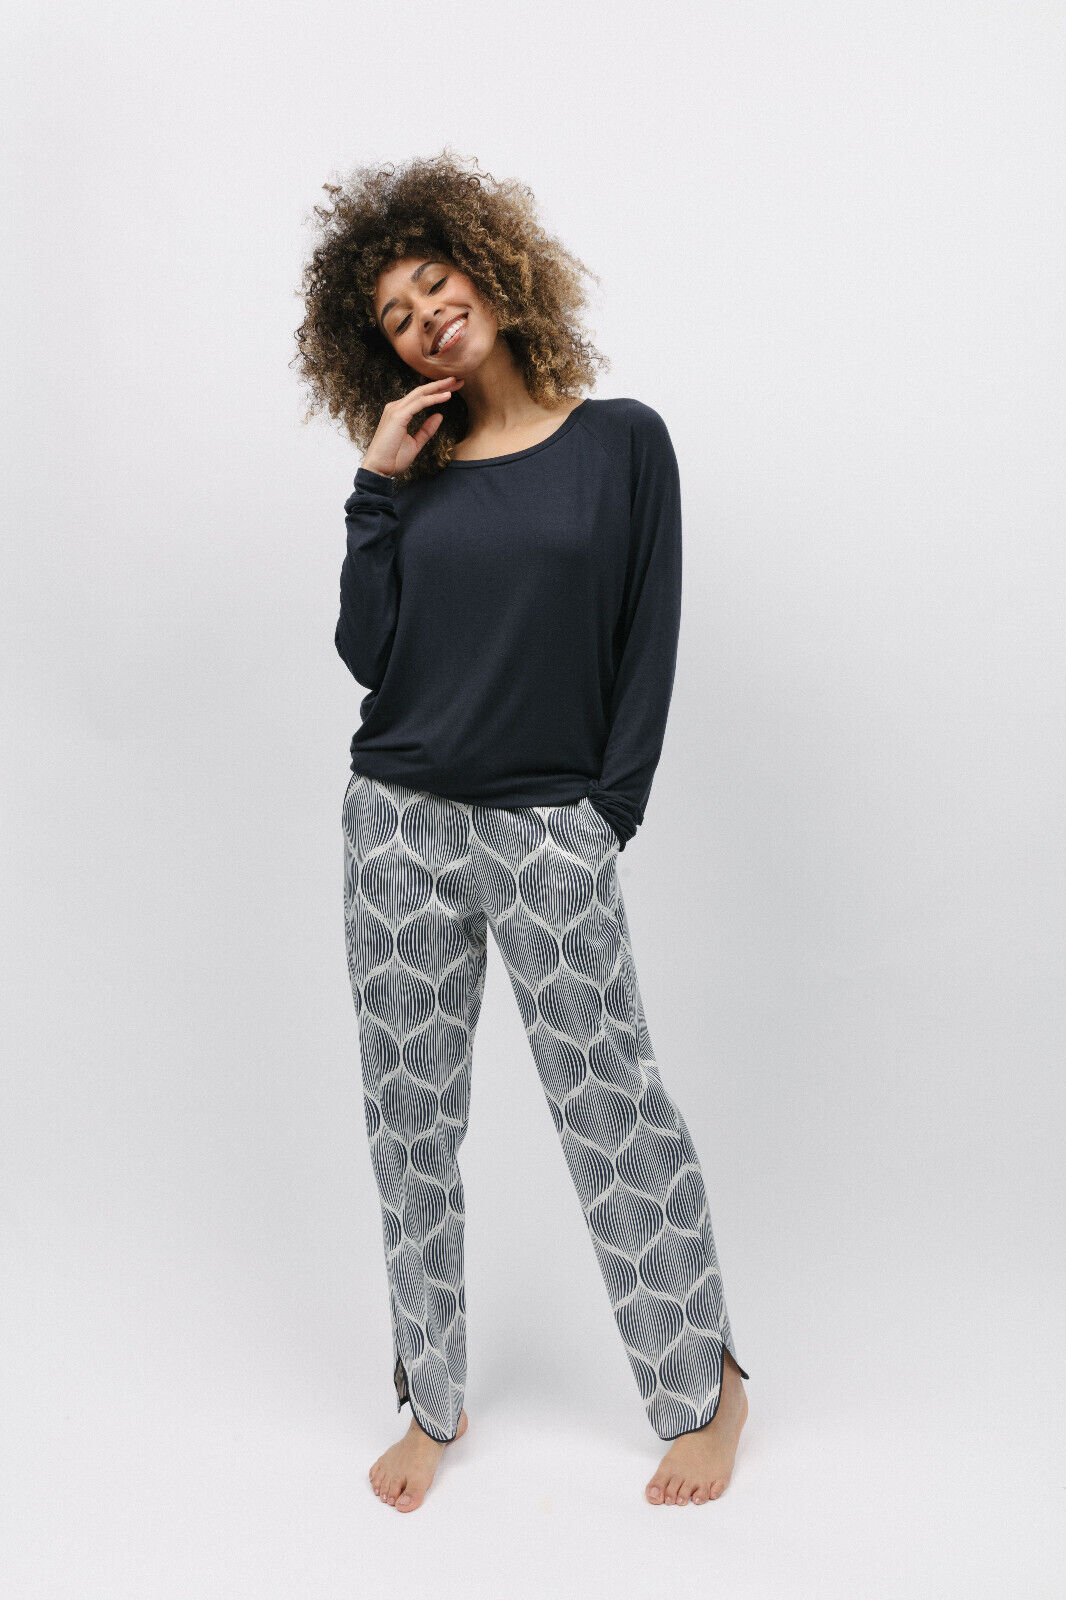 Cyberjammies 'Nicole' Charcoal Grey Slouch Top & Geo Print Pants Pyjama Set